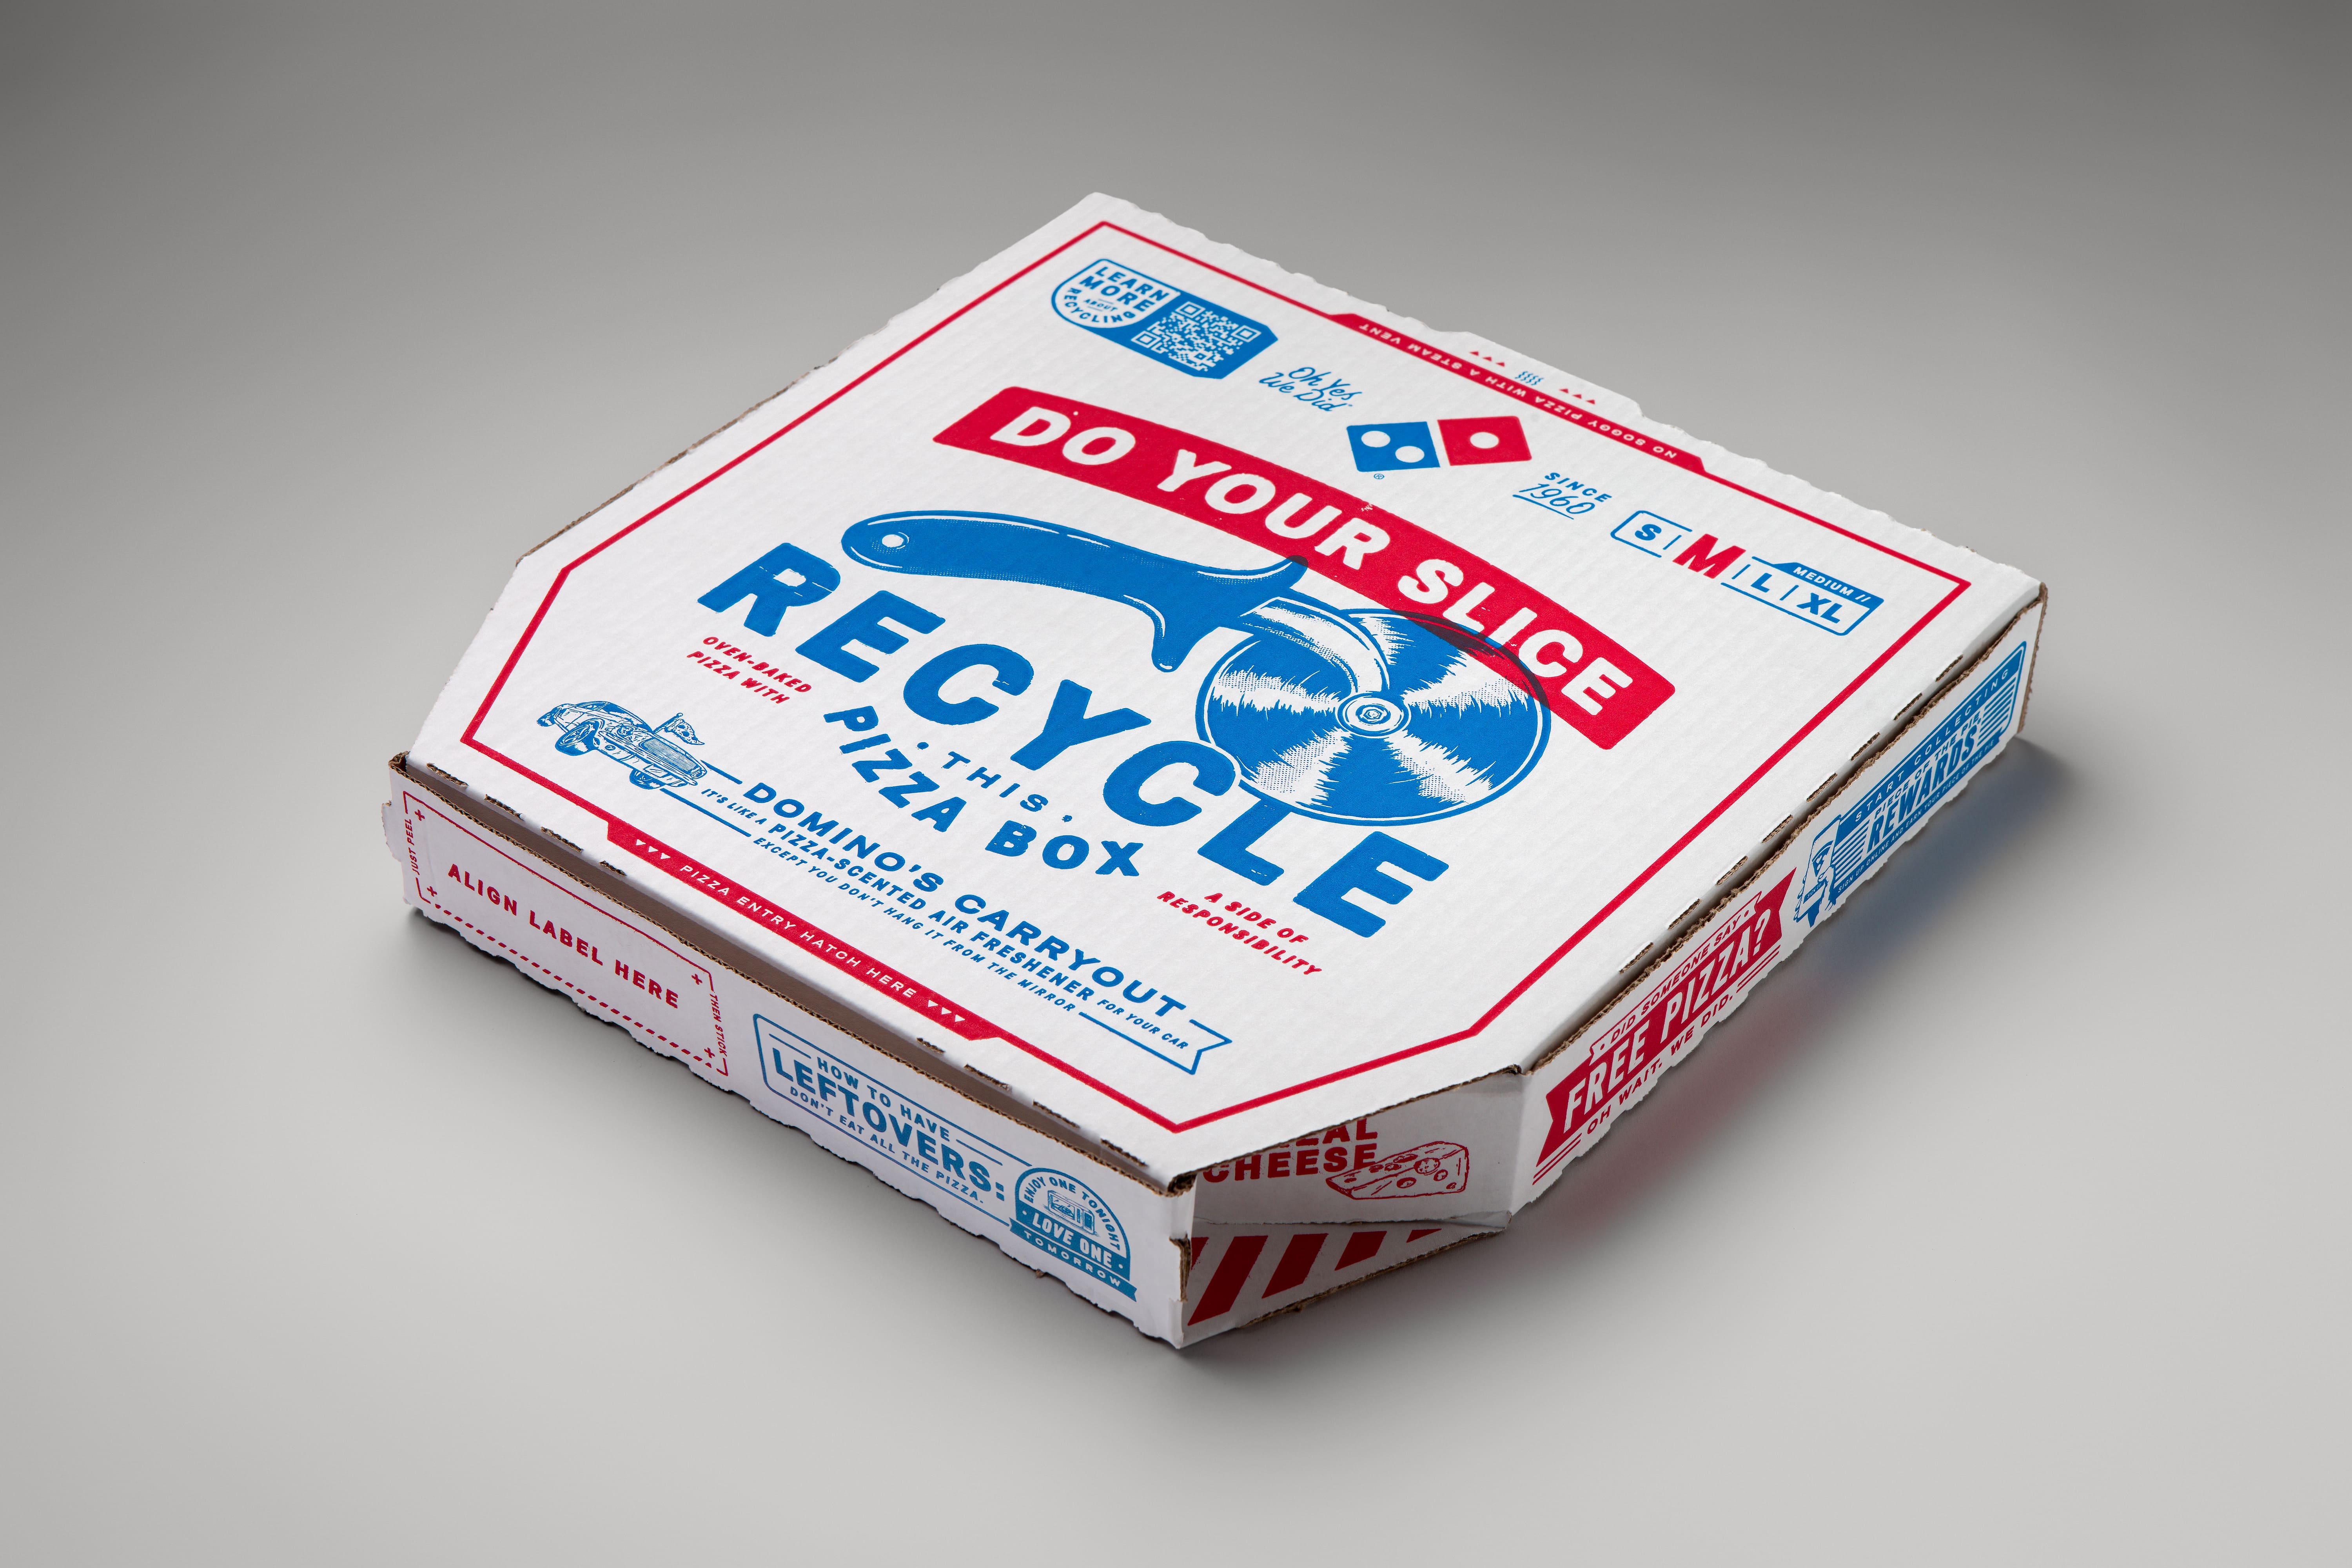 Reciclagem de caixas de pizza Dominos